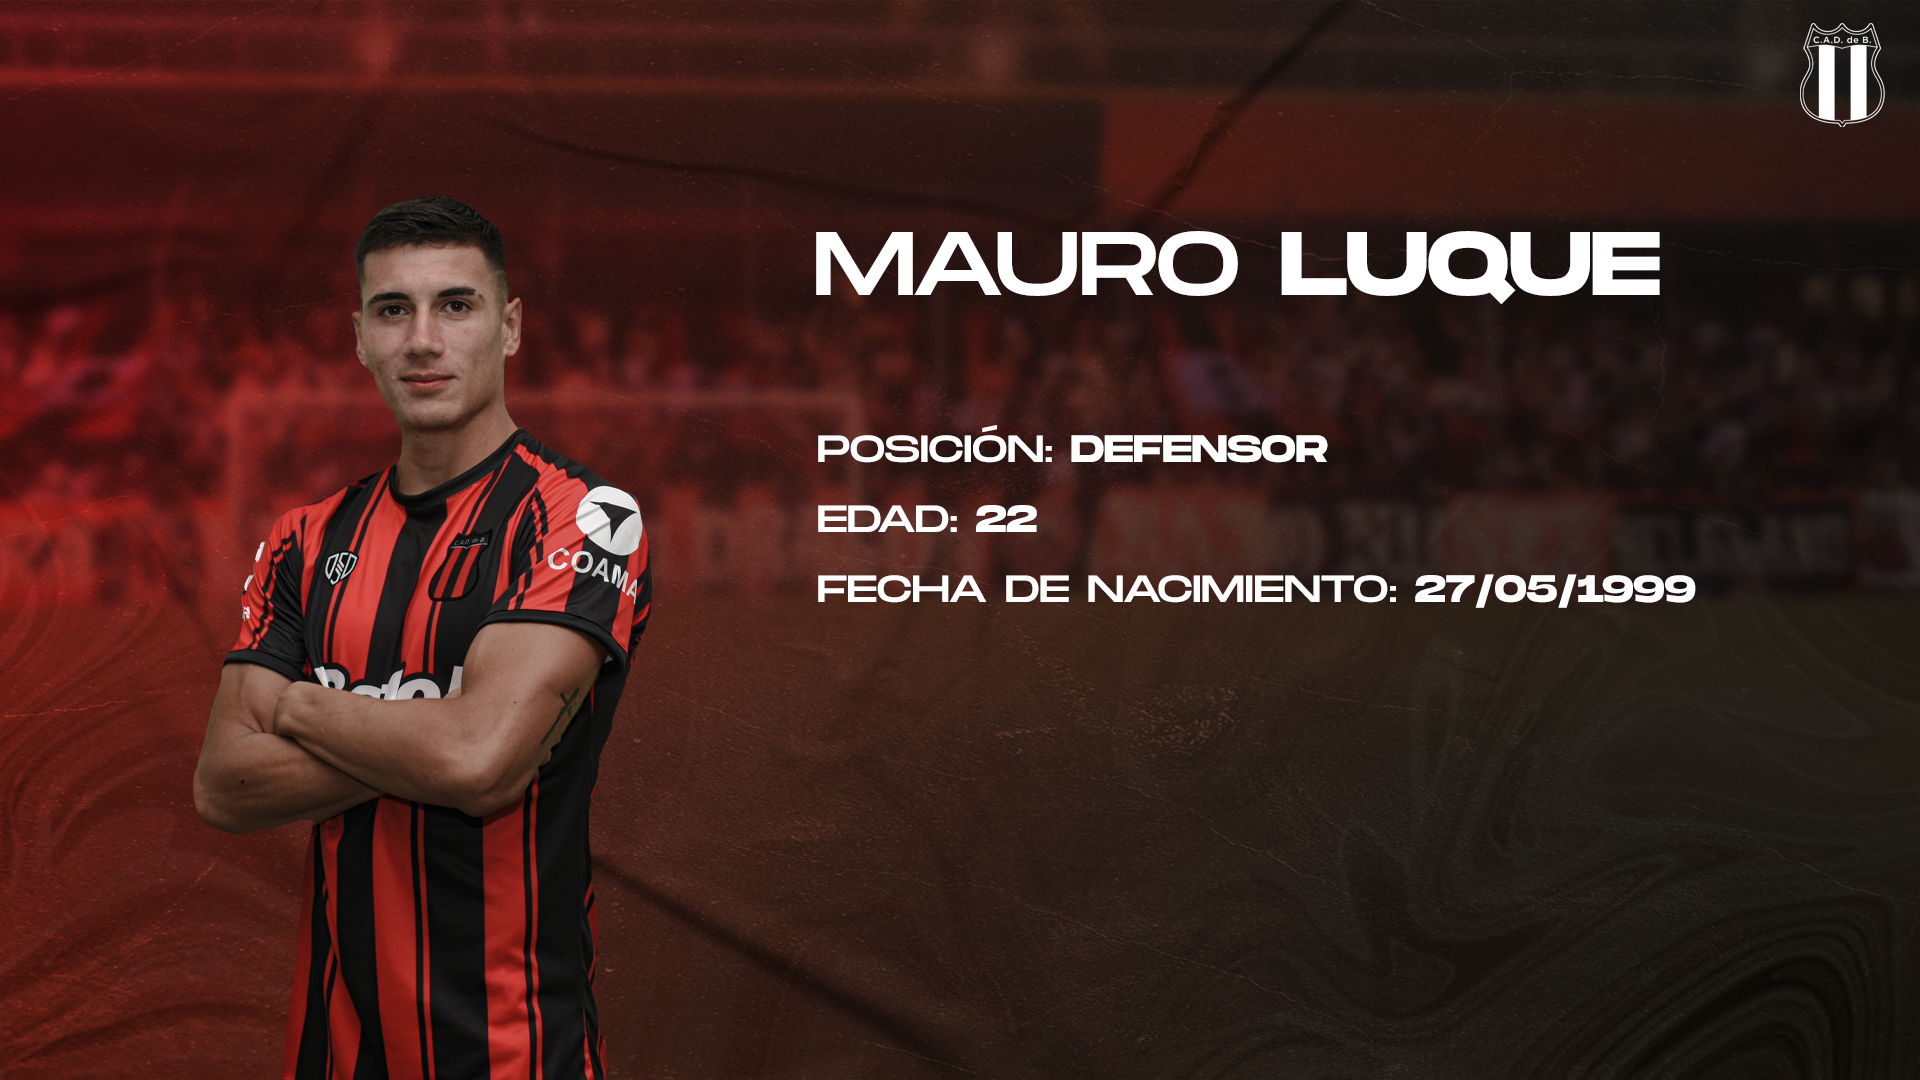 Mauro Luque